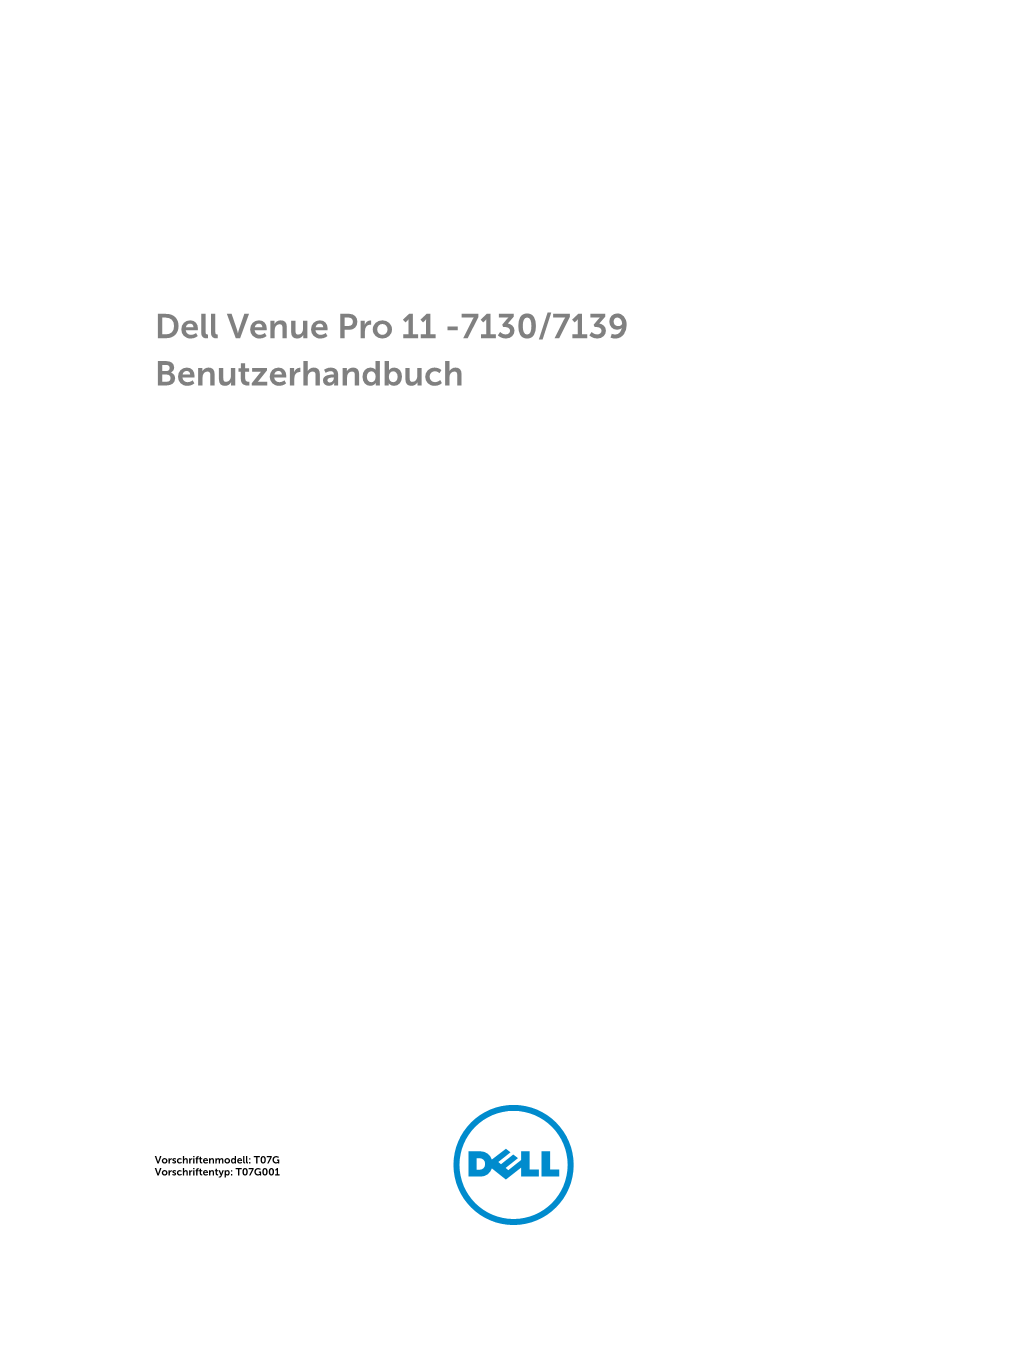 Dell Venue Pro 11 -7130/7139 Benutzerhandbuch